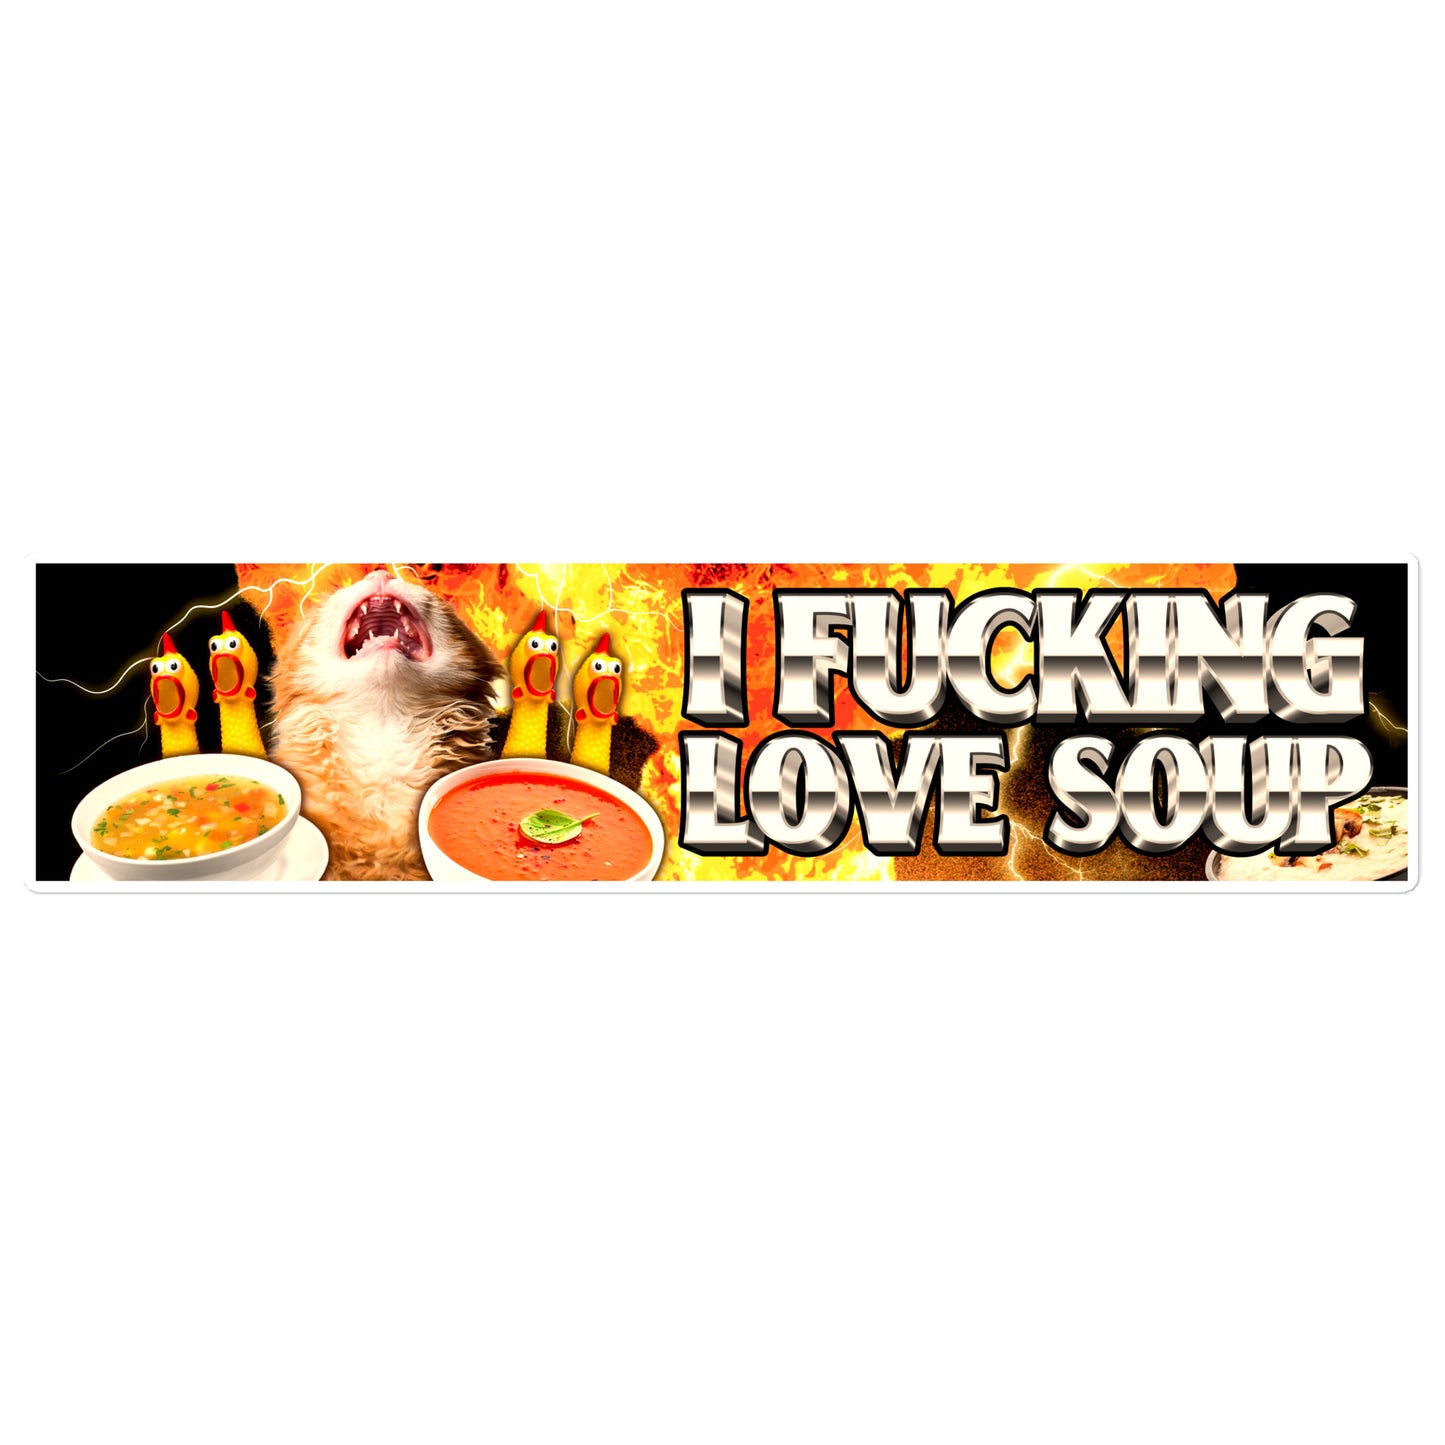 I Fucking Love Soup bumper sticker